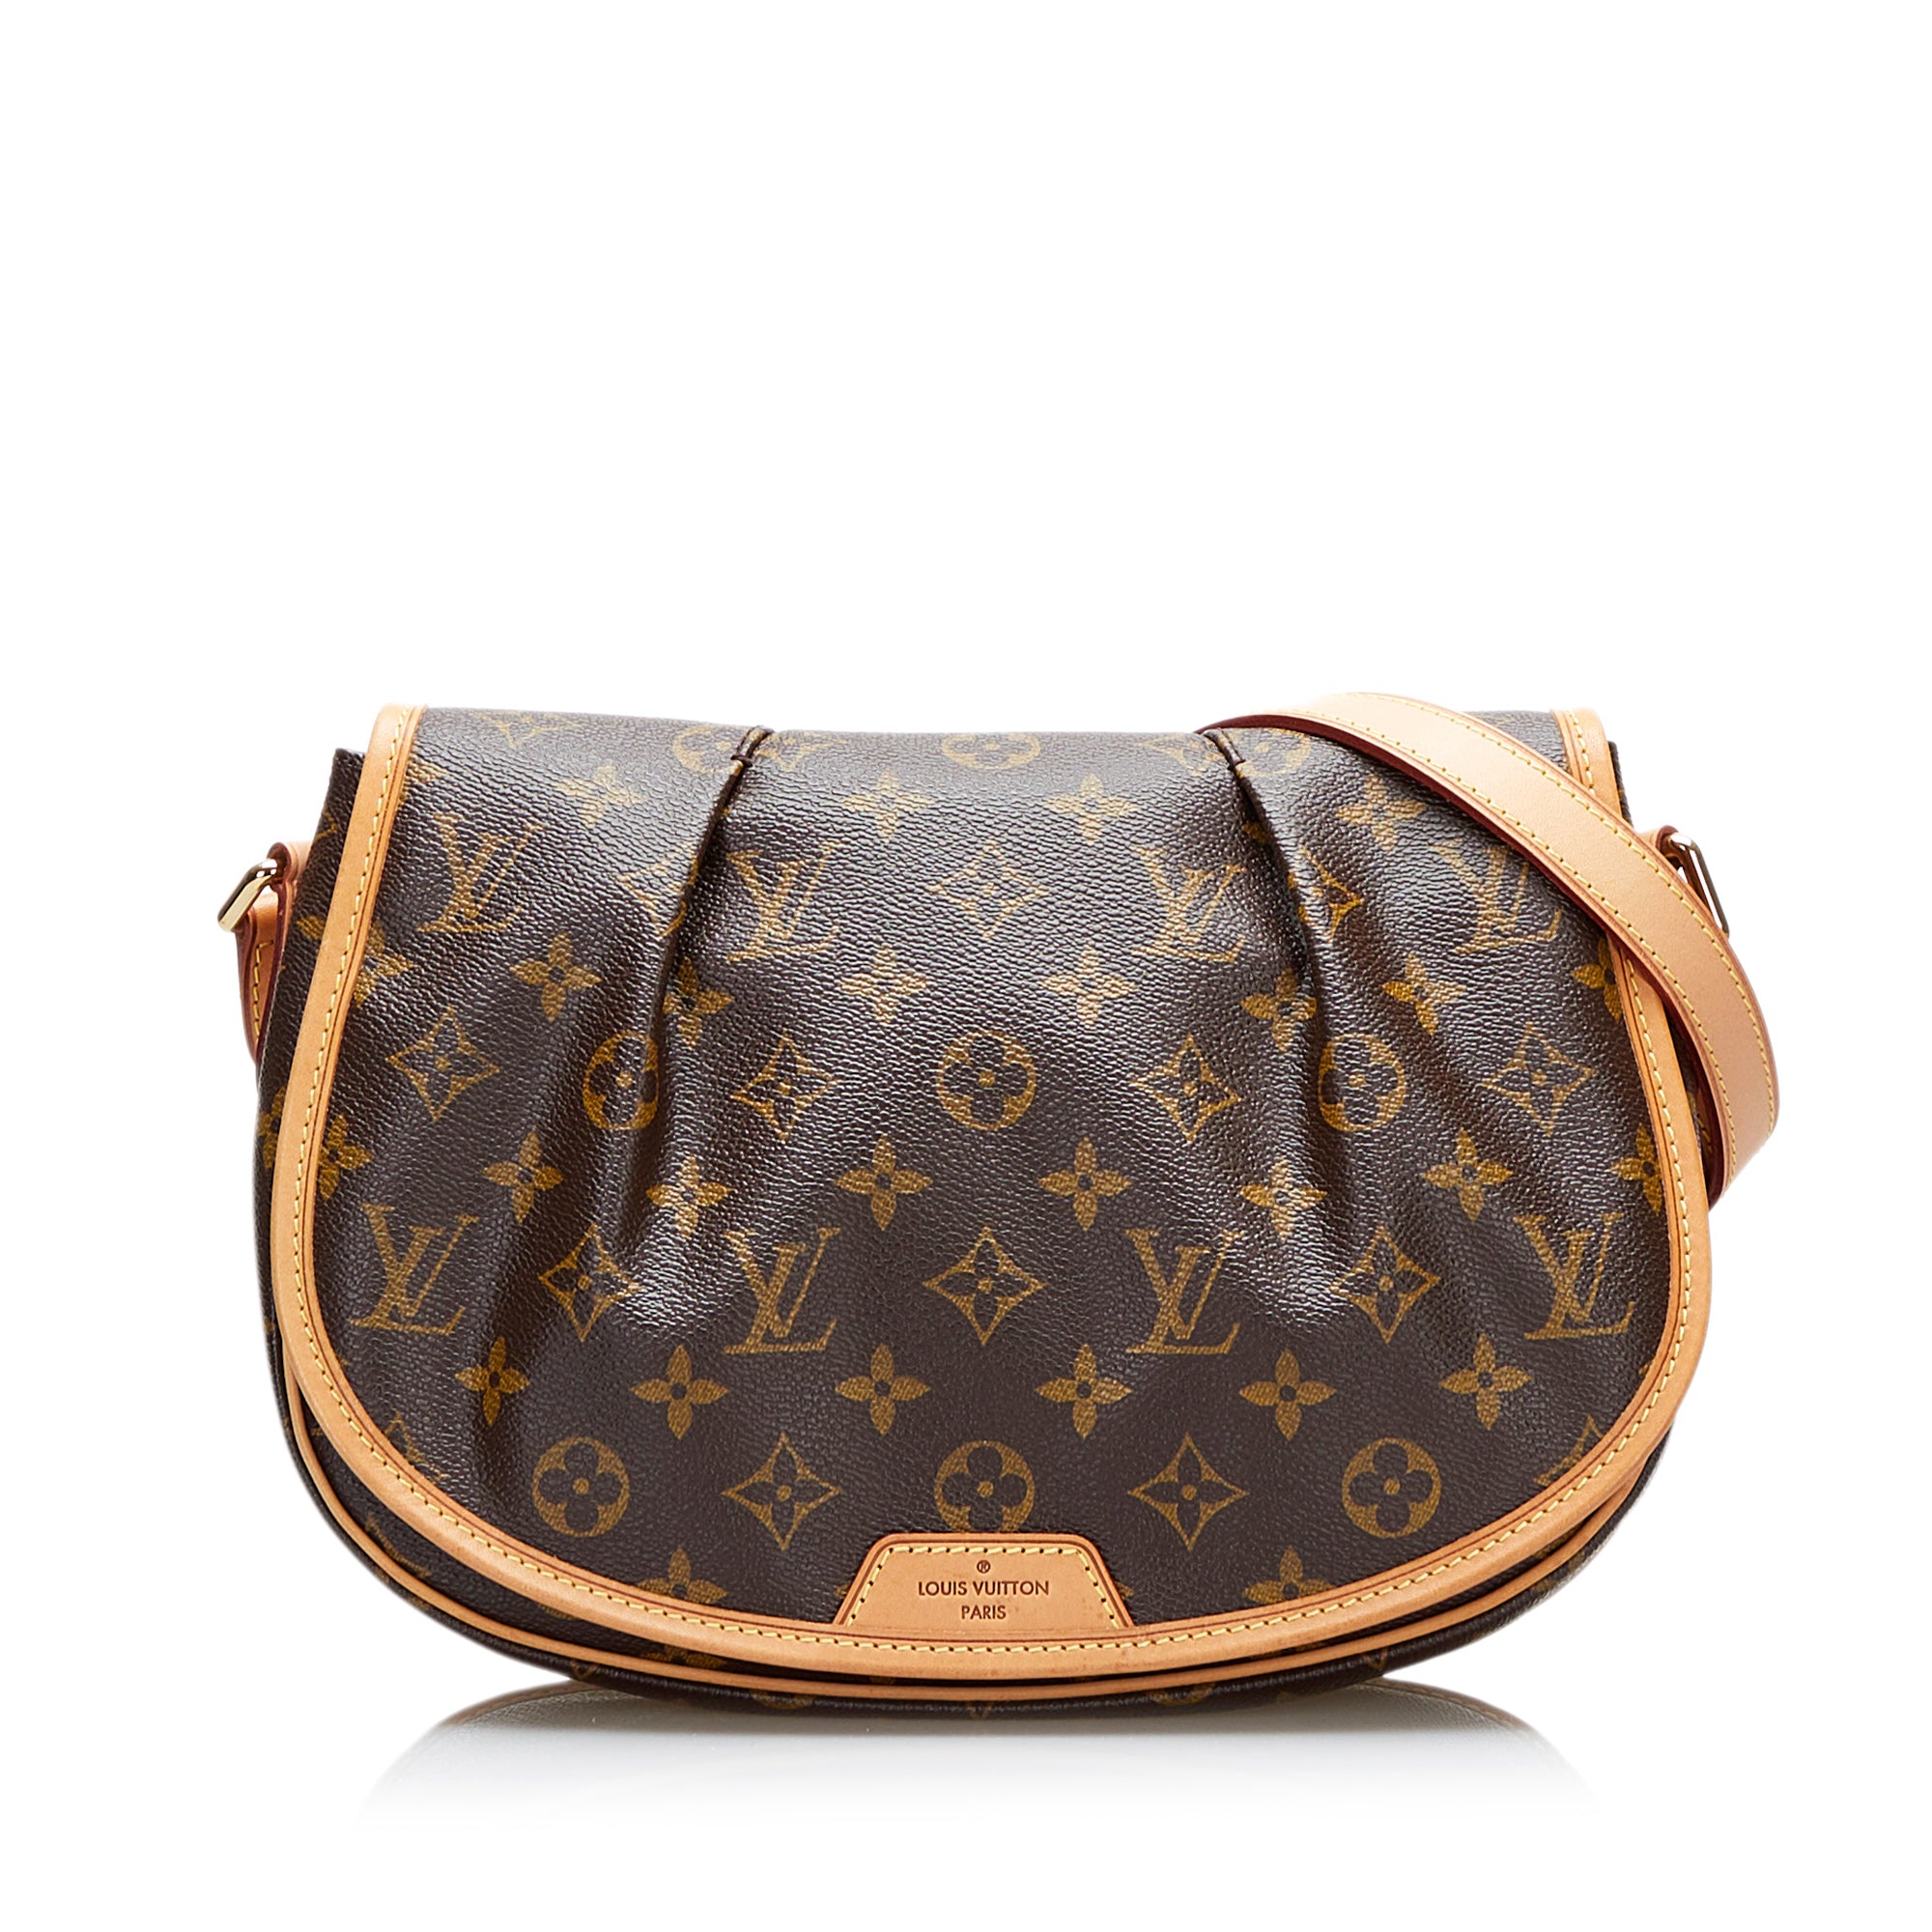 Straordinaria pochette-cintura Louis Vuitton in pelle Epi marrone